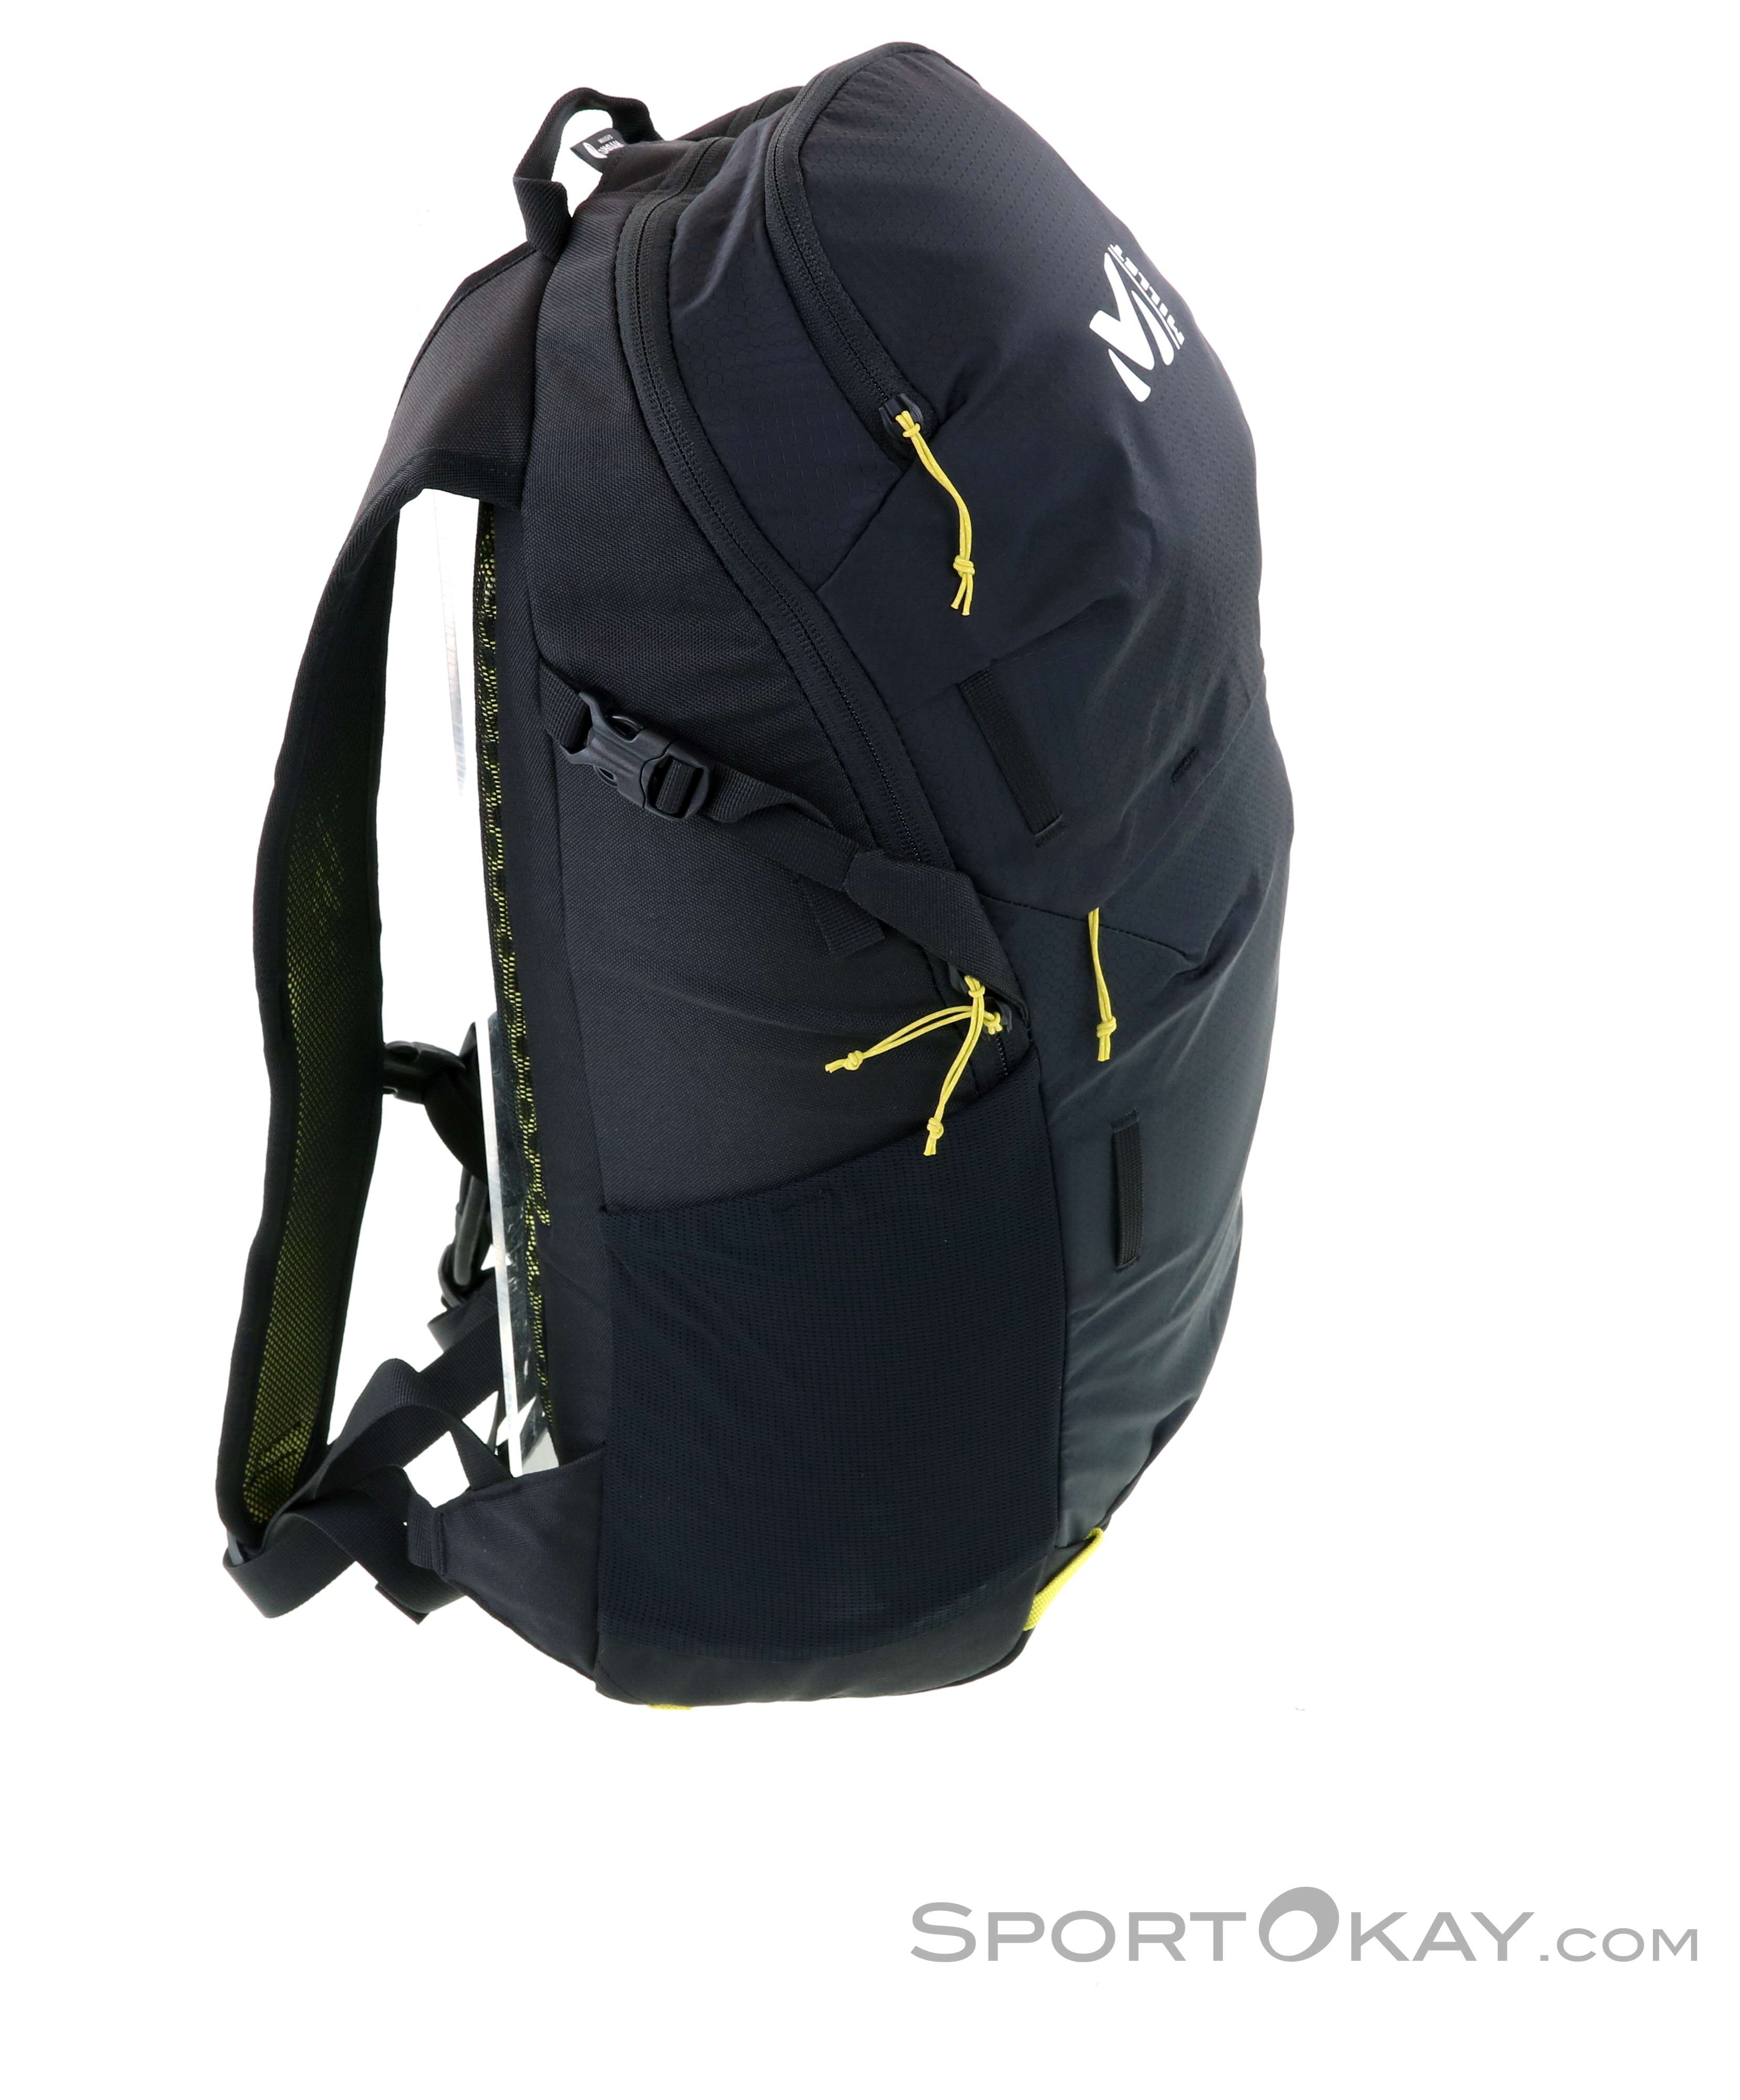 Millet Yari 20l Backpack - Backpacks - Backpacks & Headlamps - Outdoor - All